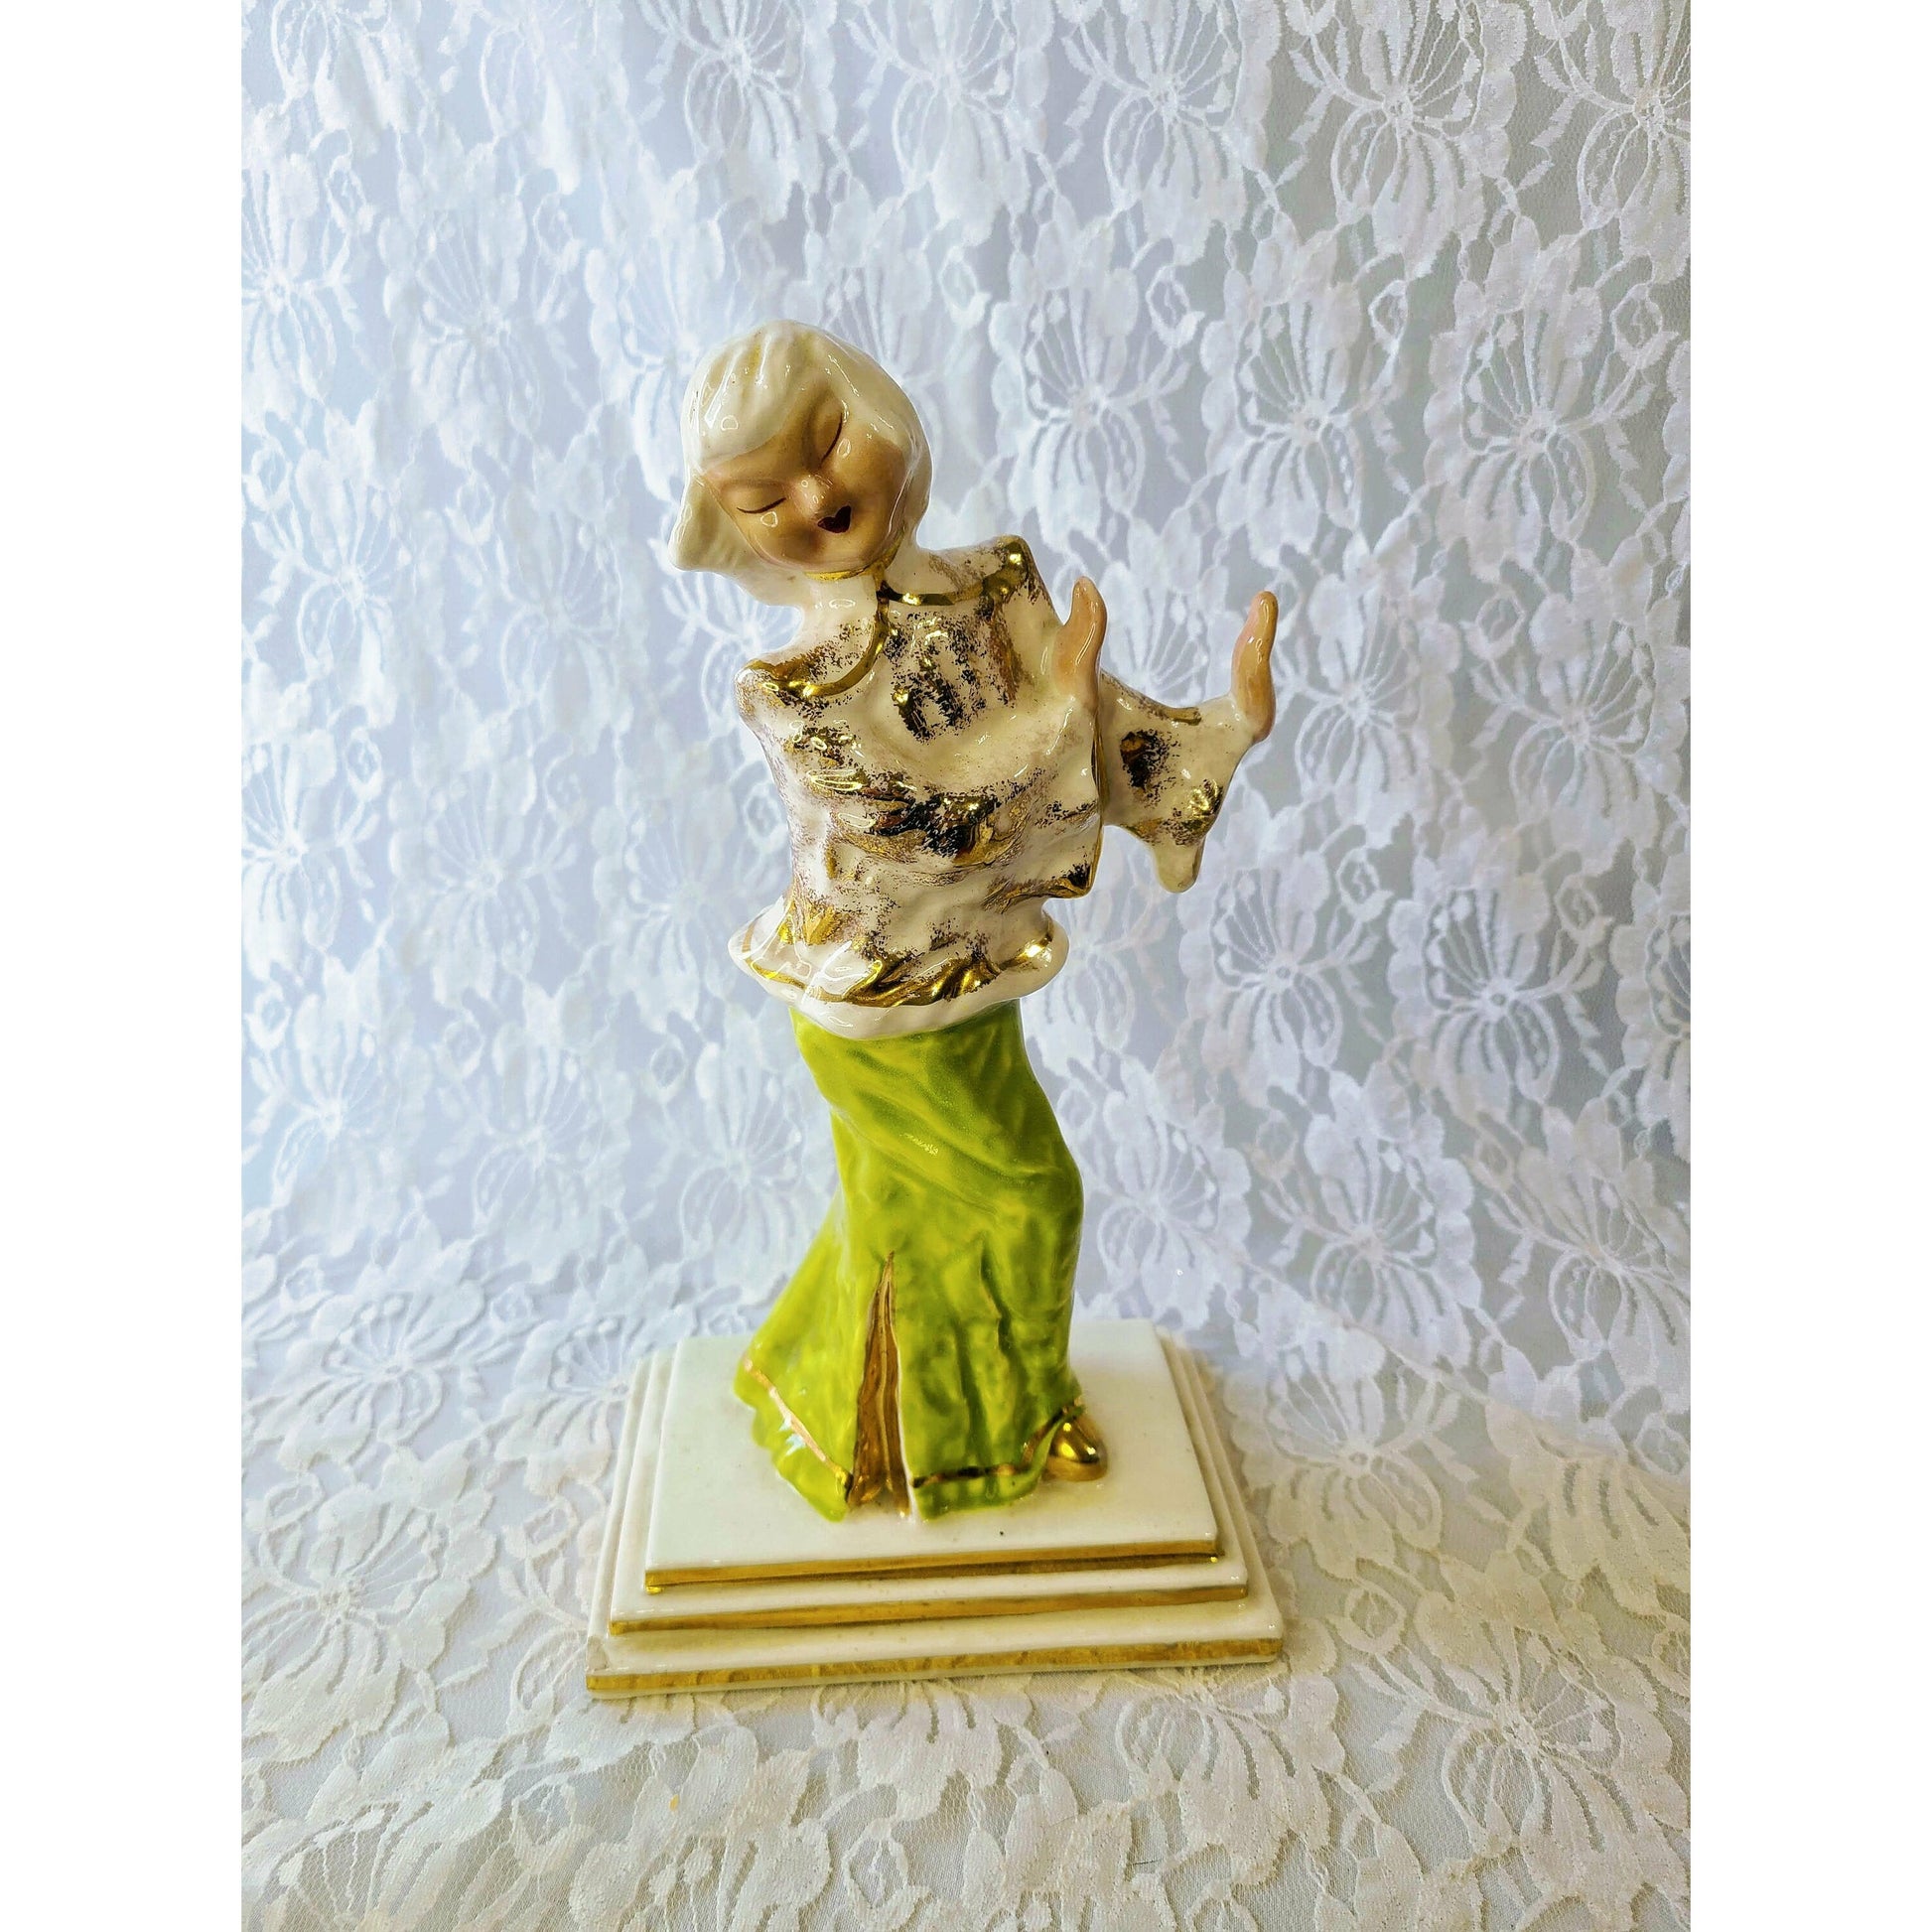 Thai Siamese Temple Dancer Figurine ~Vintage Mid Century 1950s Porcelain w/ GOLD Gilding Woman~ Collectible Figurine